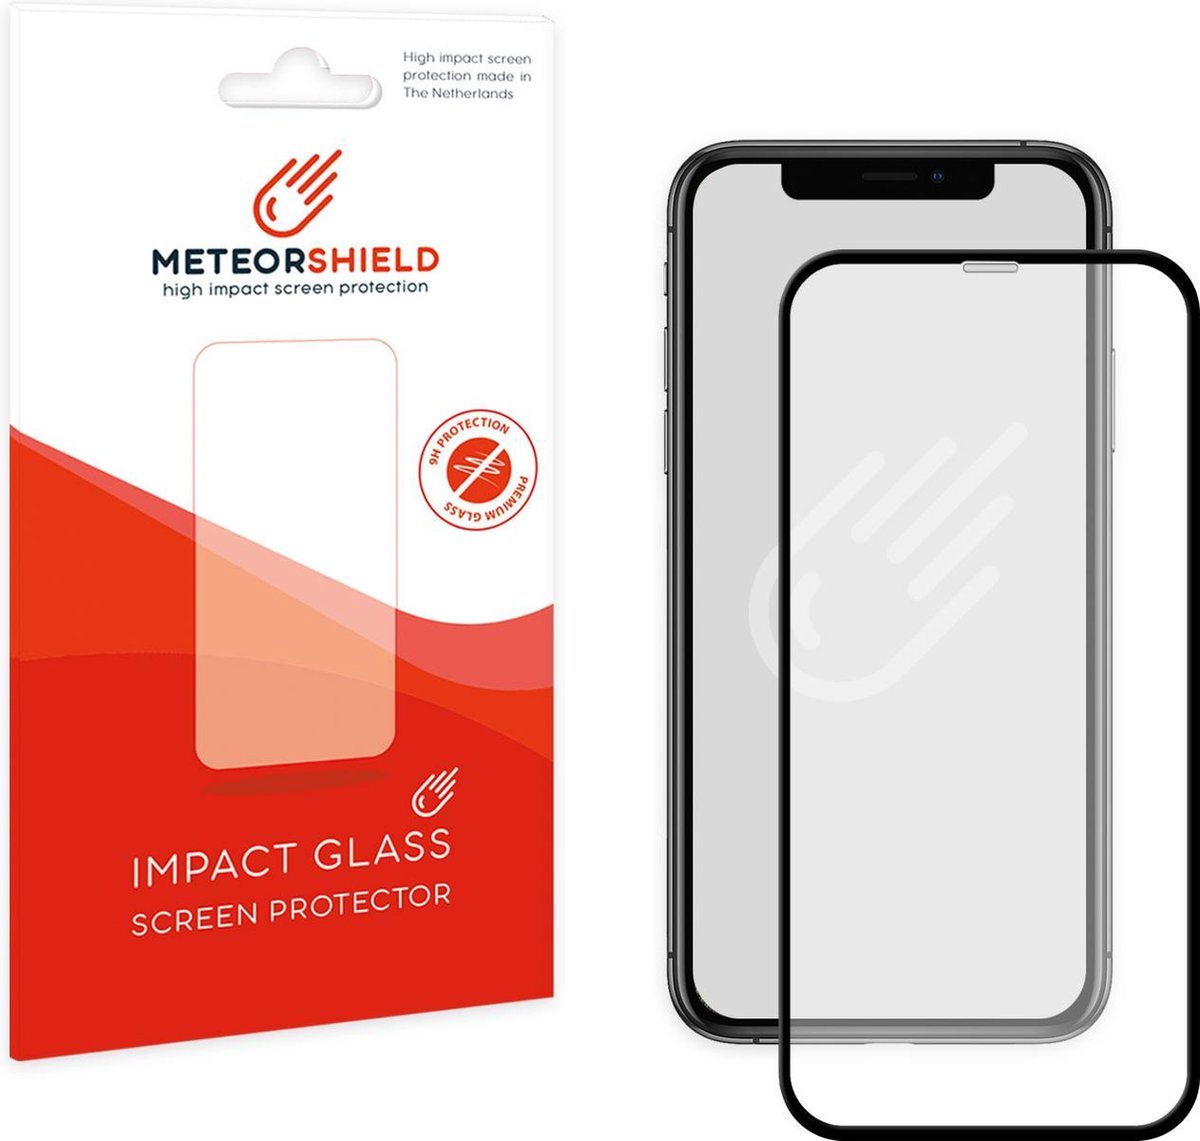 Meteorshield iPhone Xs screenprotector - Ultra clear impact glass